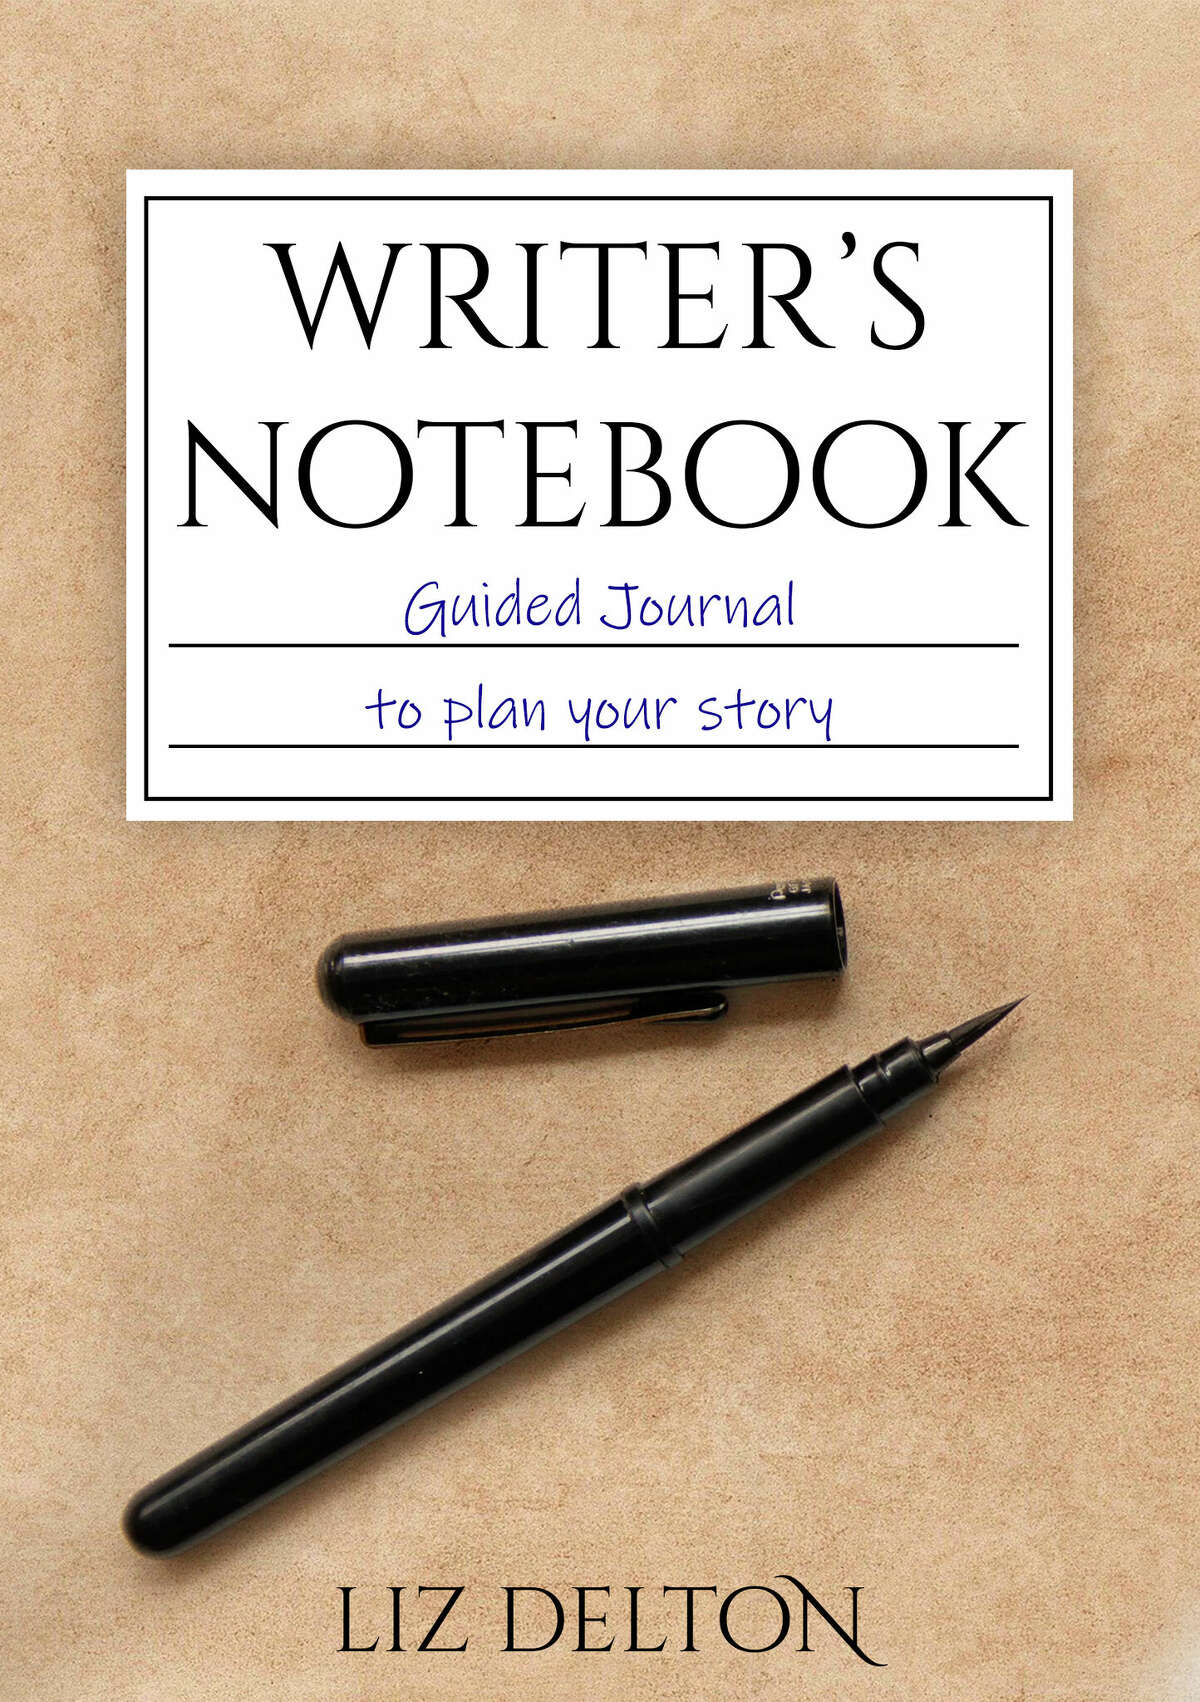 "Writer's Notebook" by Liz Delton. 